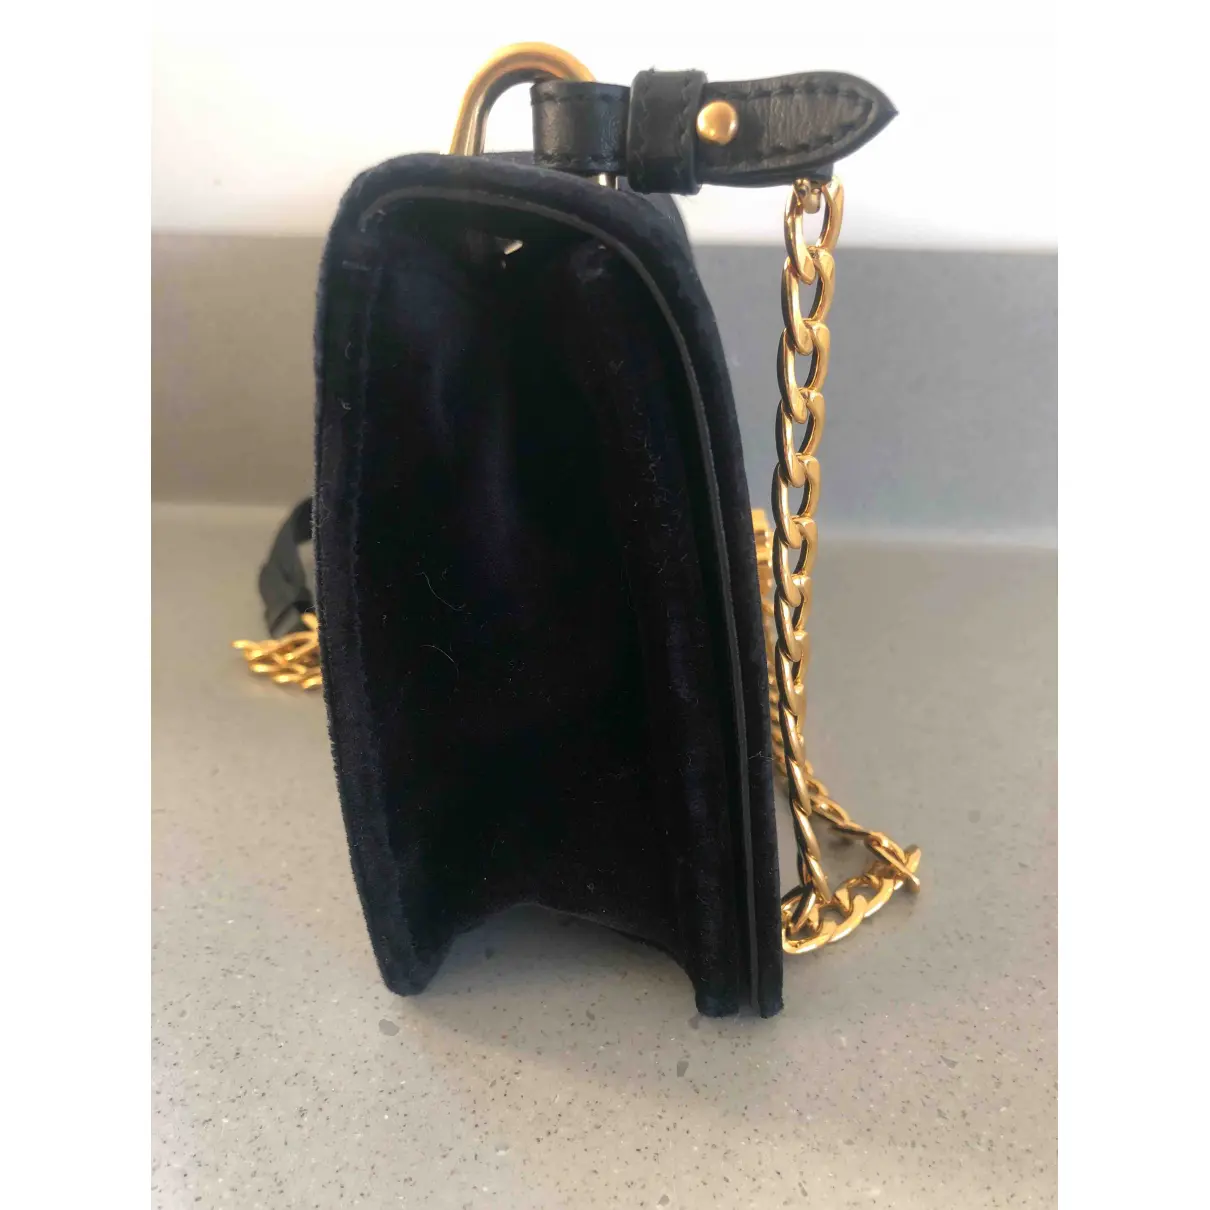 Buy Prada Velvet clutch bag online